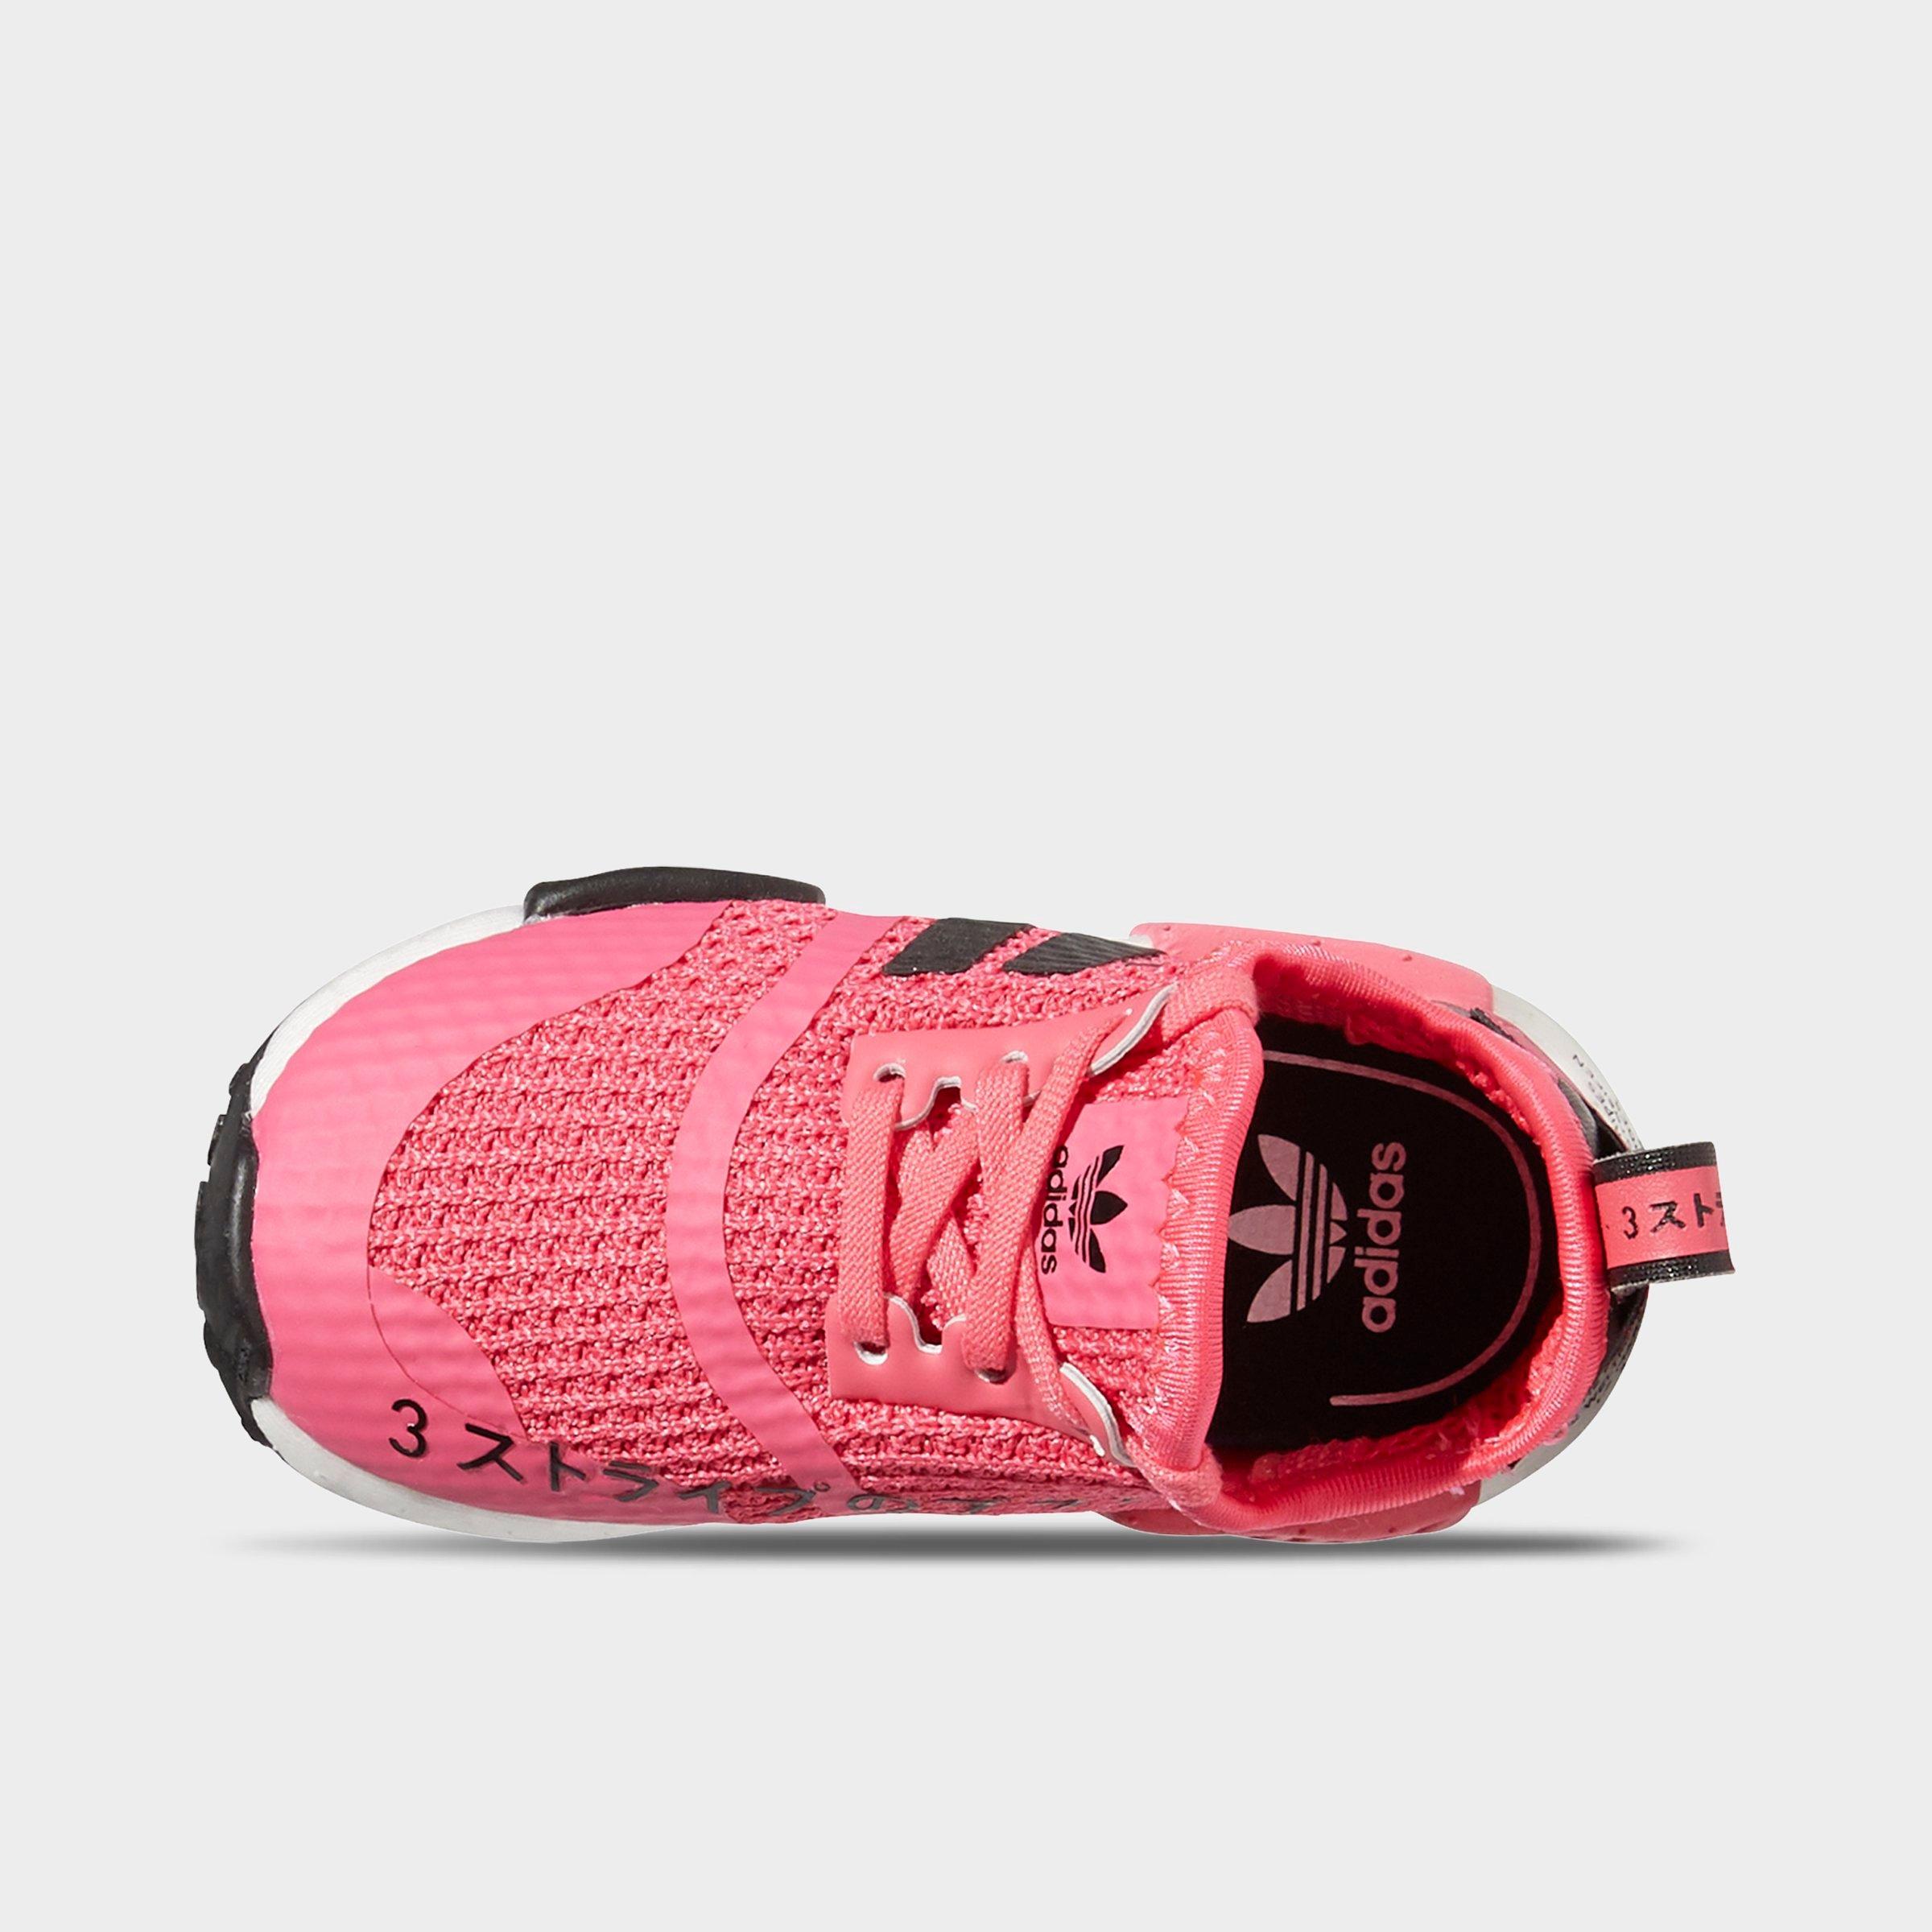 black and pink toddler adidas